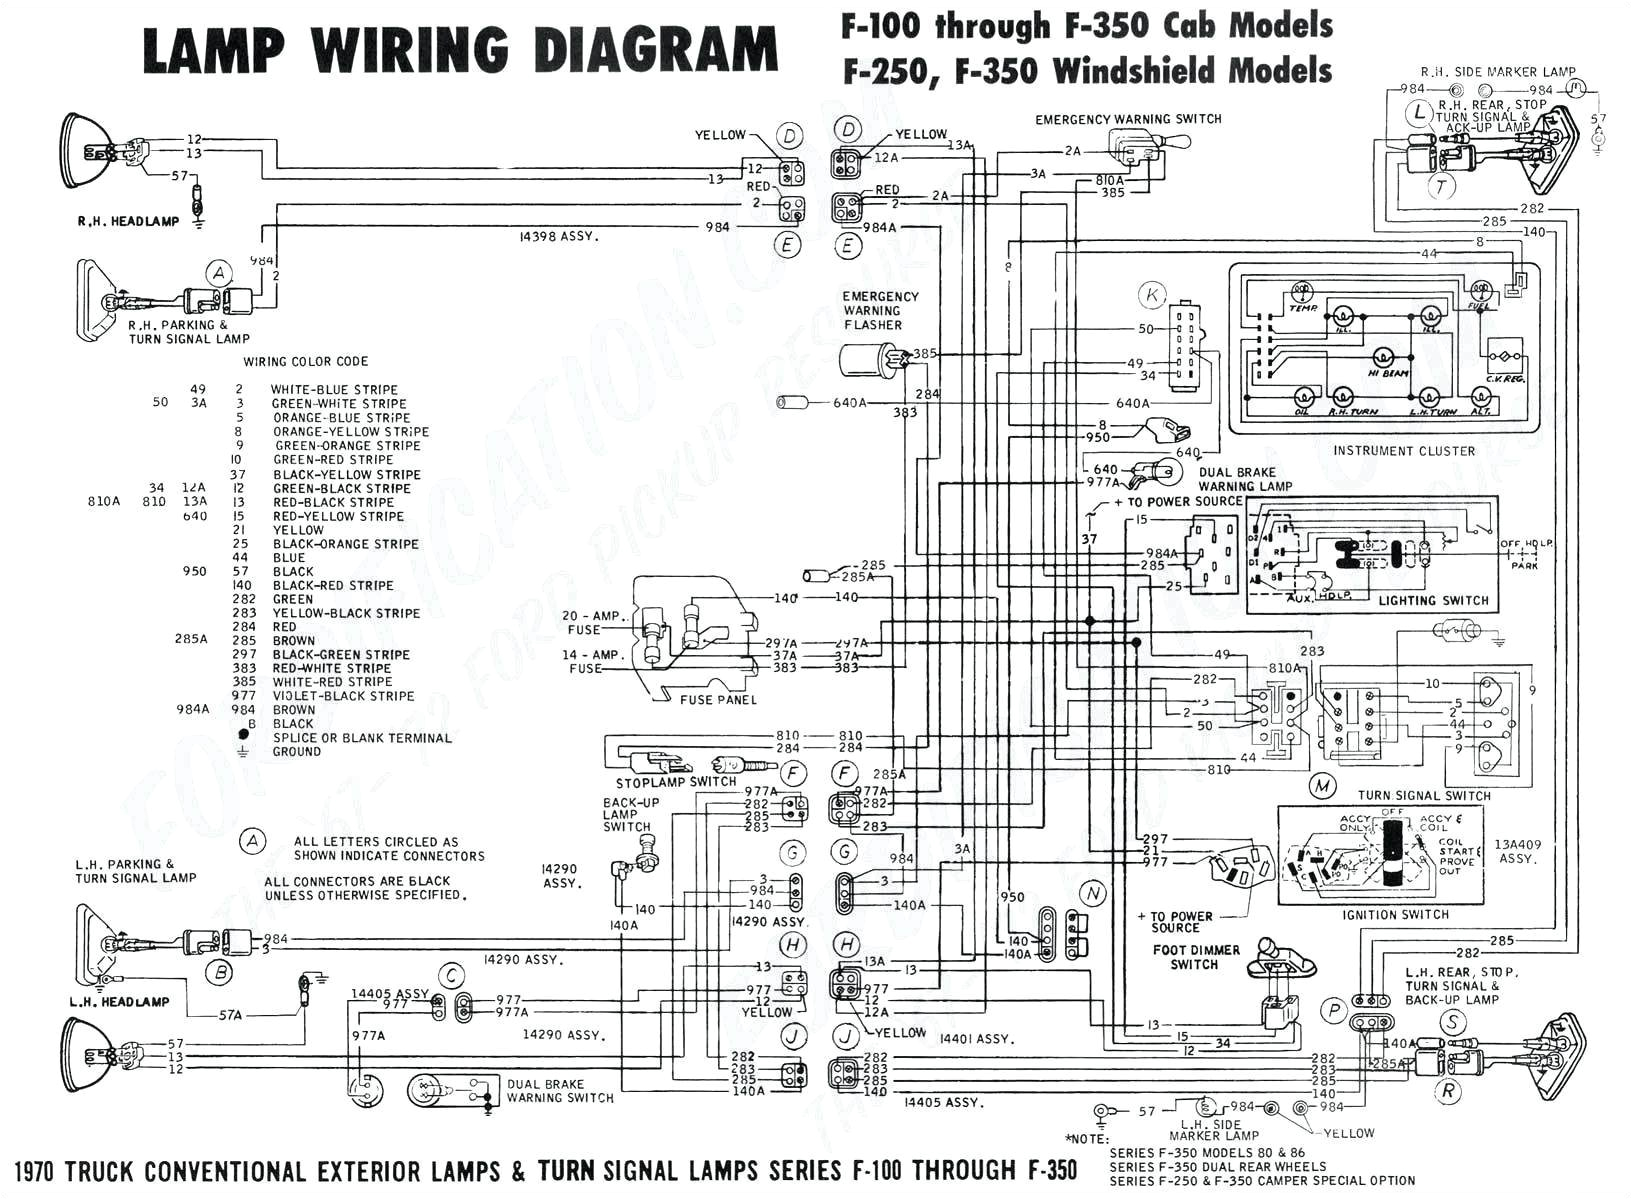 honeywell manual thermostat wiring diagram